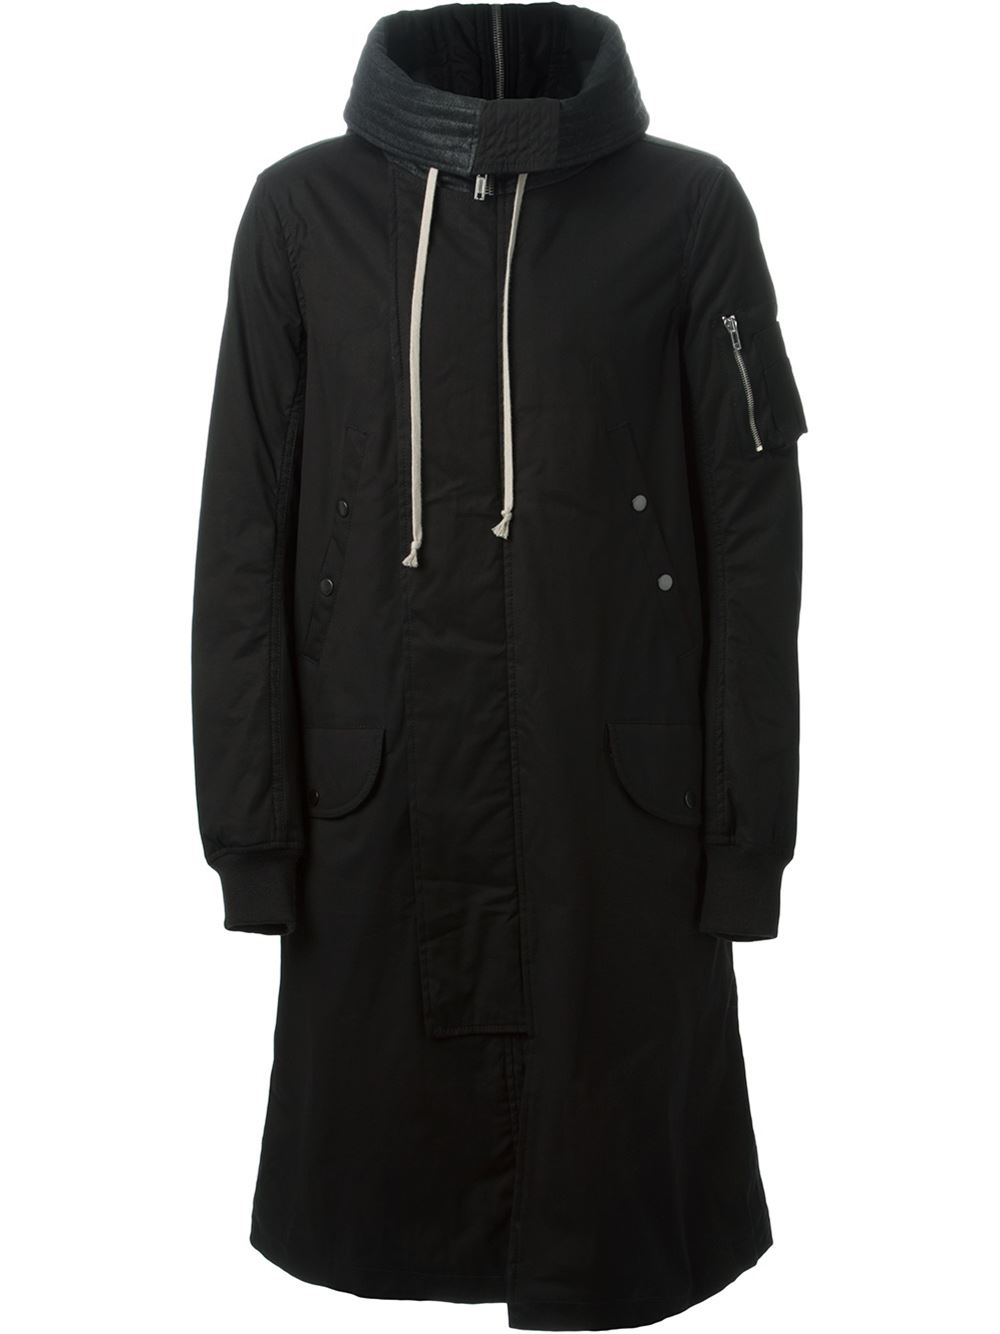 Drkshdw by rick owens Hooded Parka Coat in Black for Men | Lyst